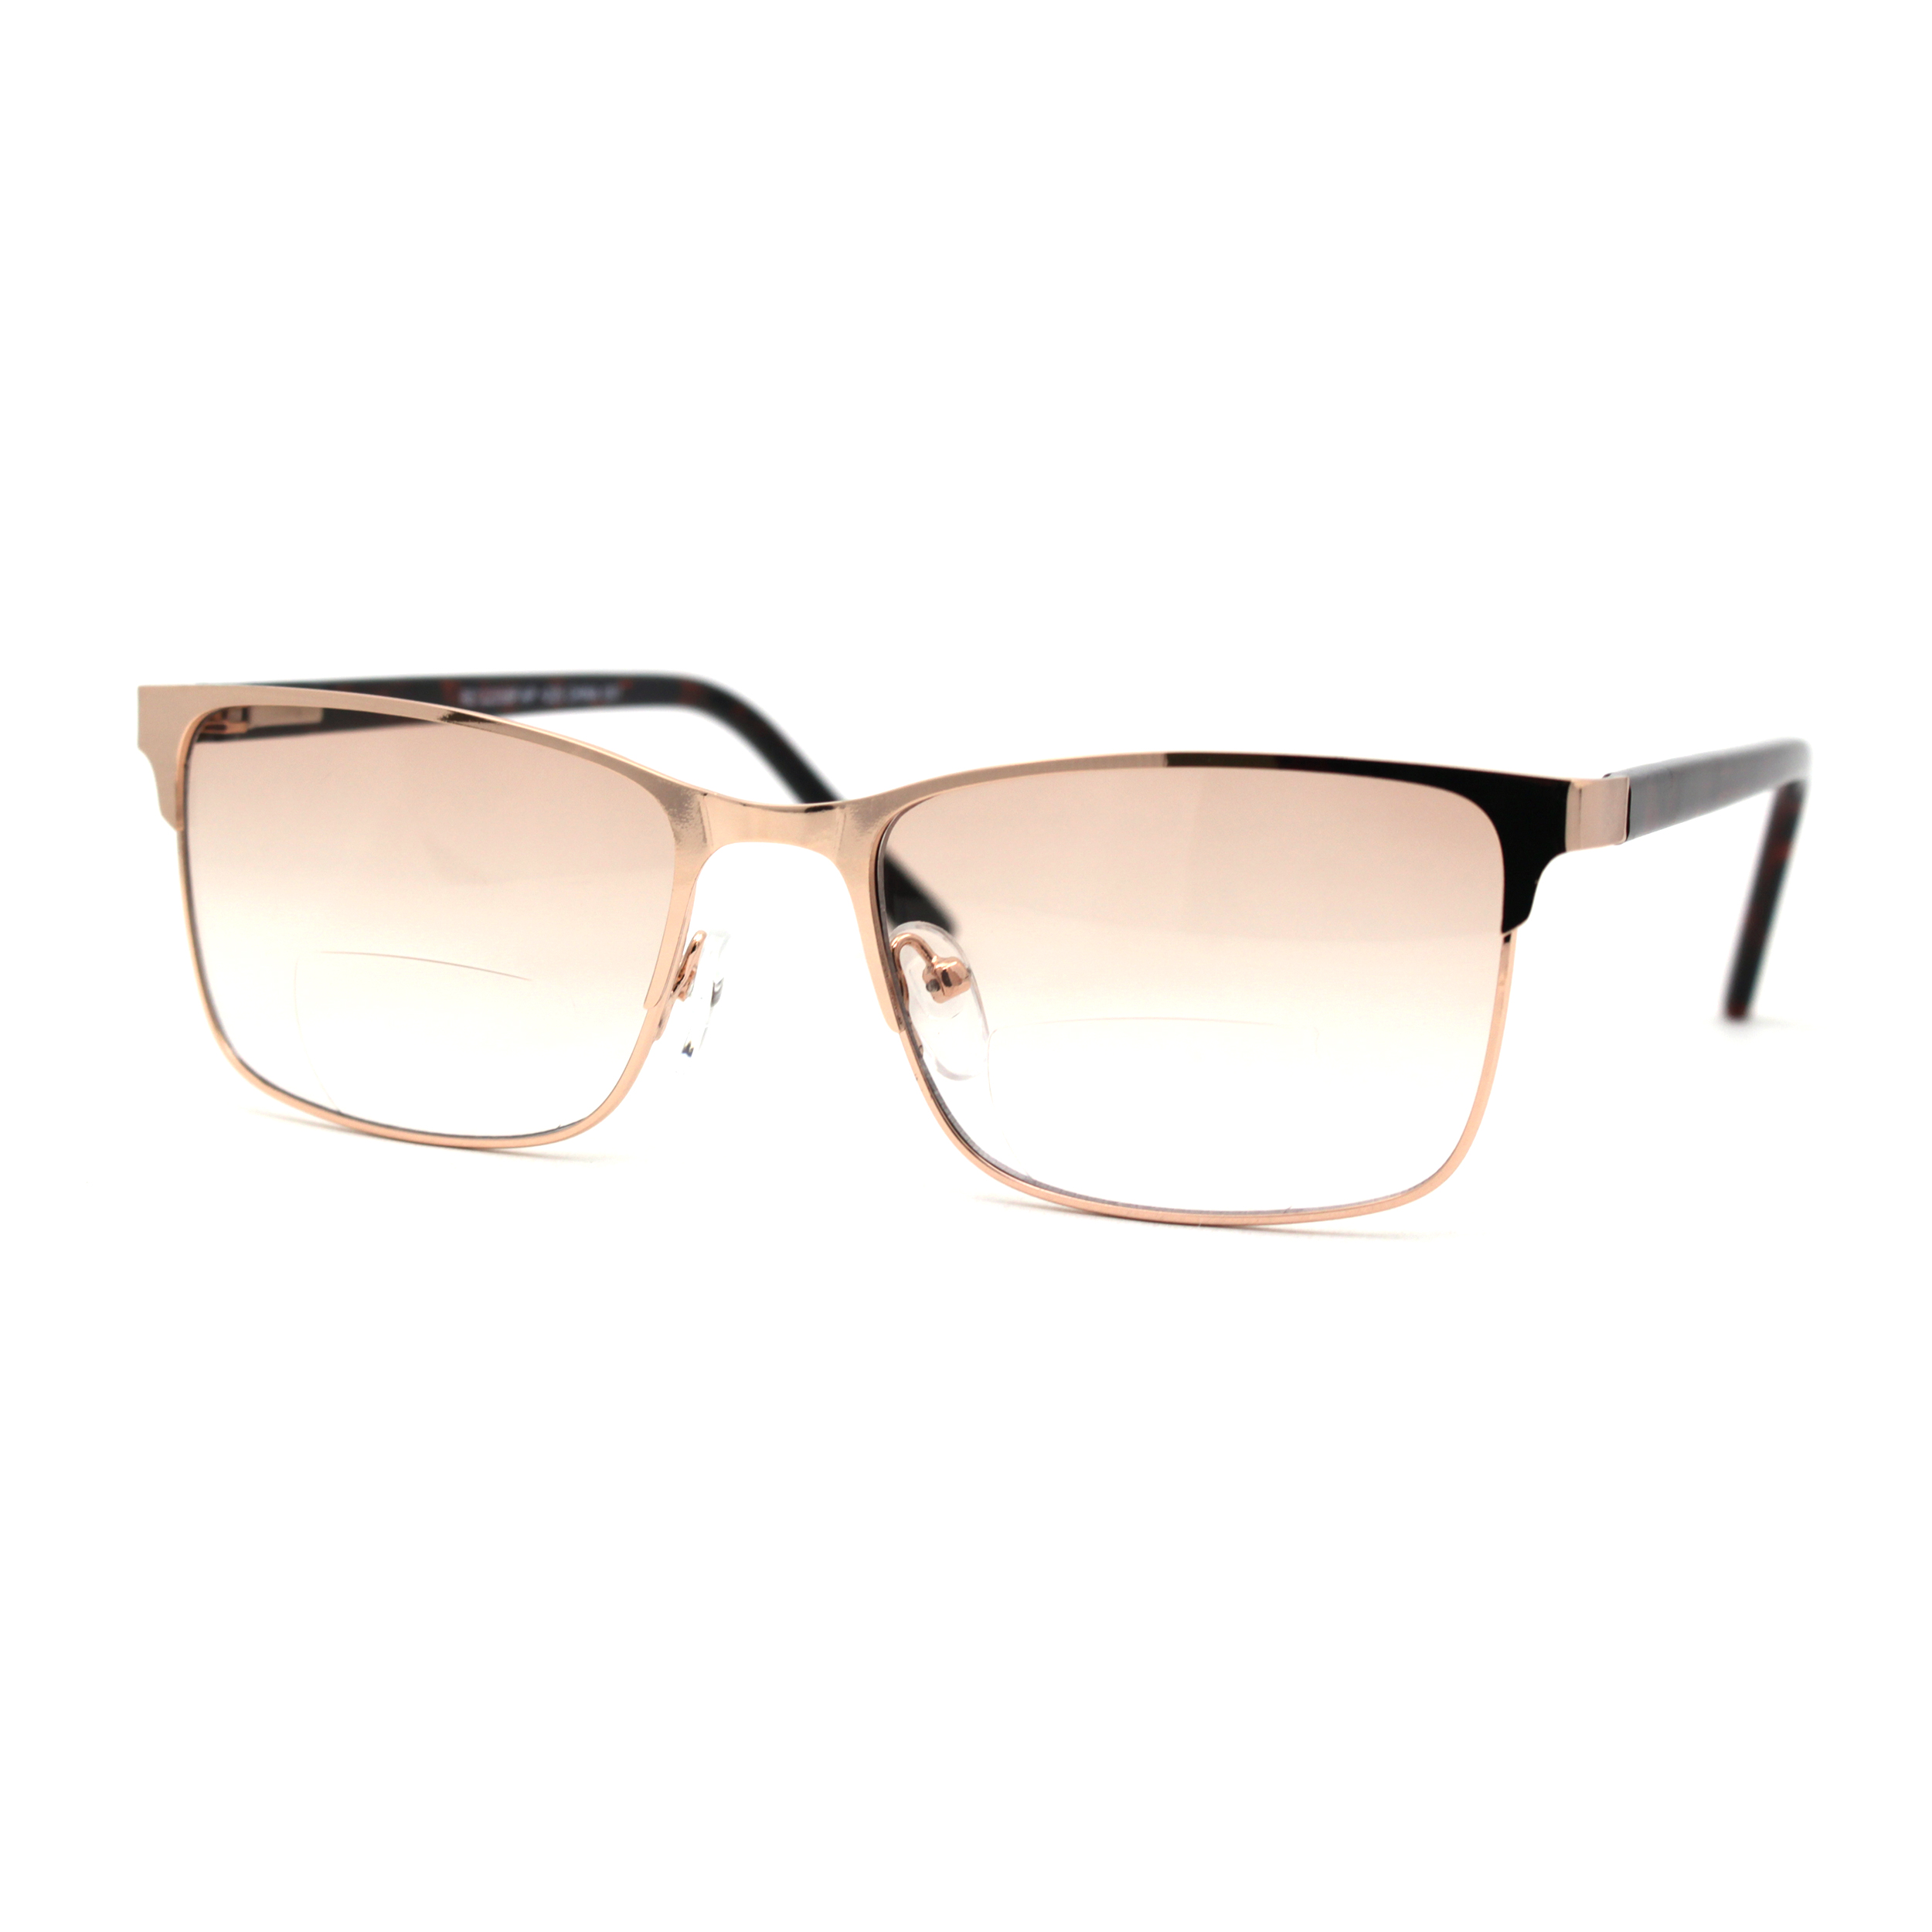 Mens Metal Half Rim Rectangular Bifocal Light Sunglasses Reader Gold +3.0 - image 1 of 4